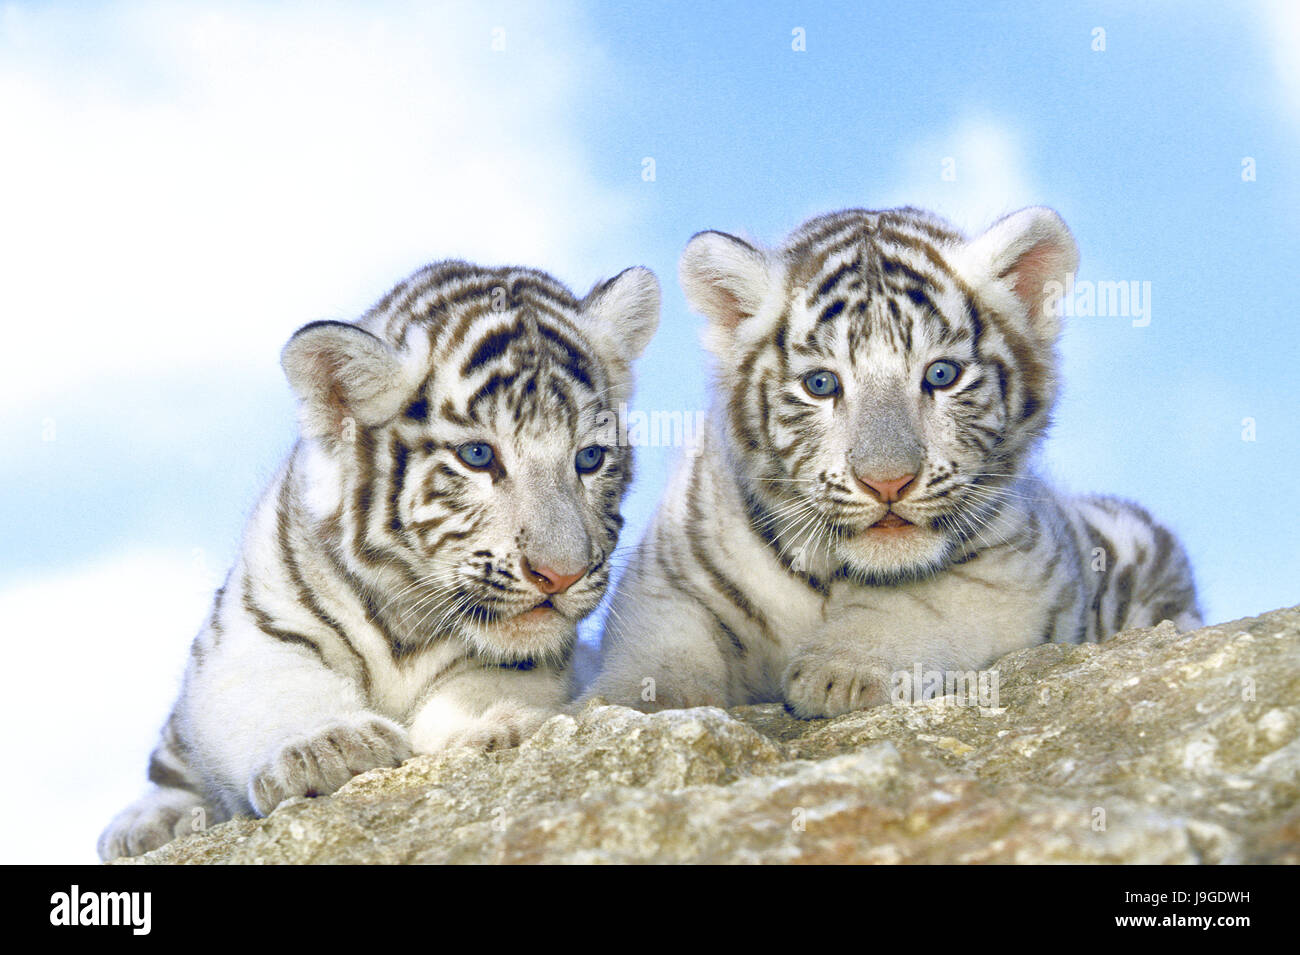 White Tiger, Panthera tigris, Cub, Banque D'Images